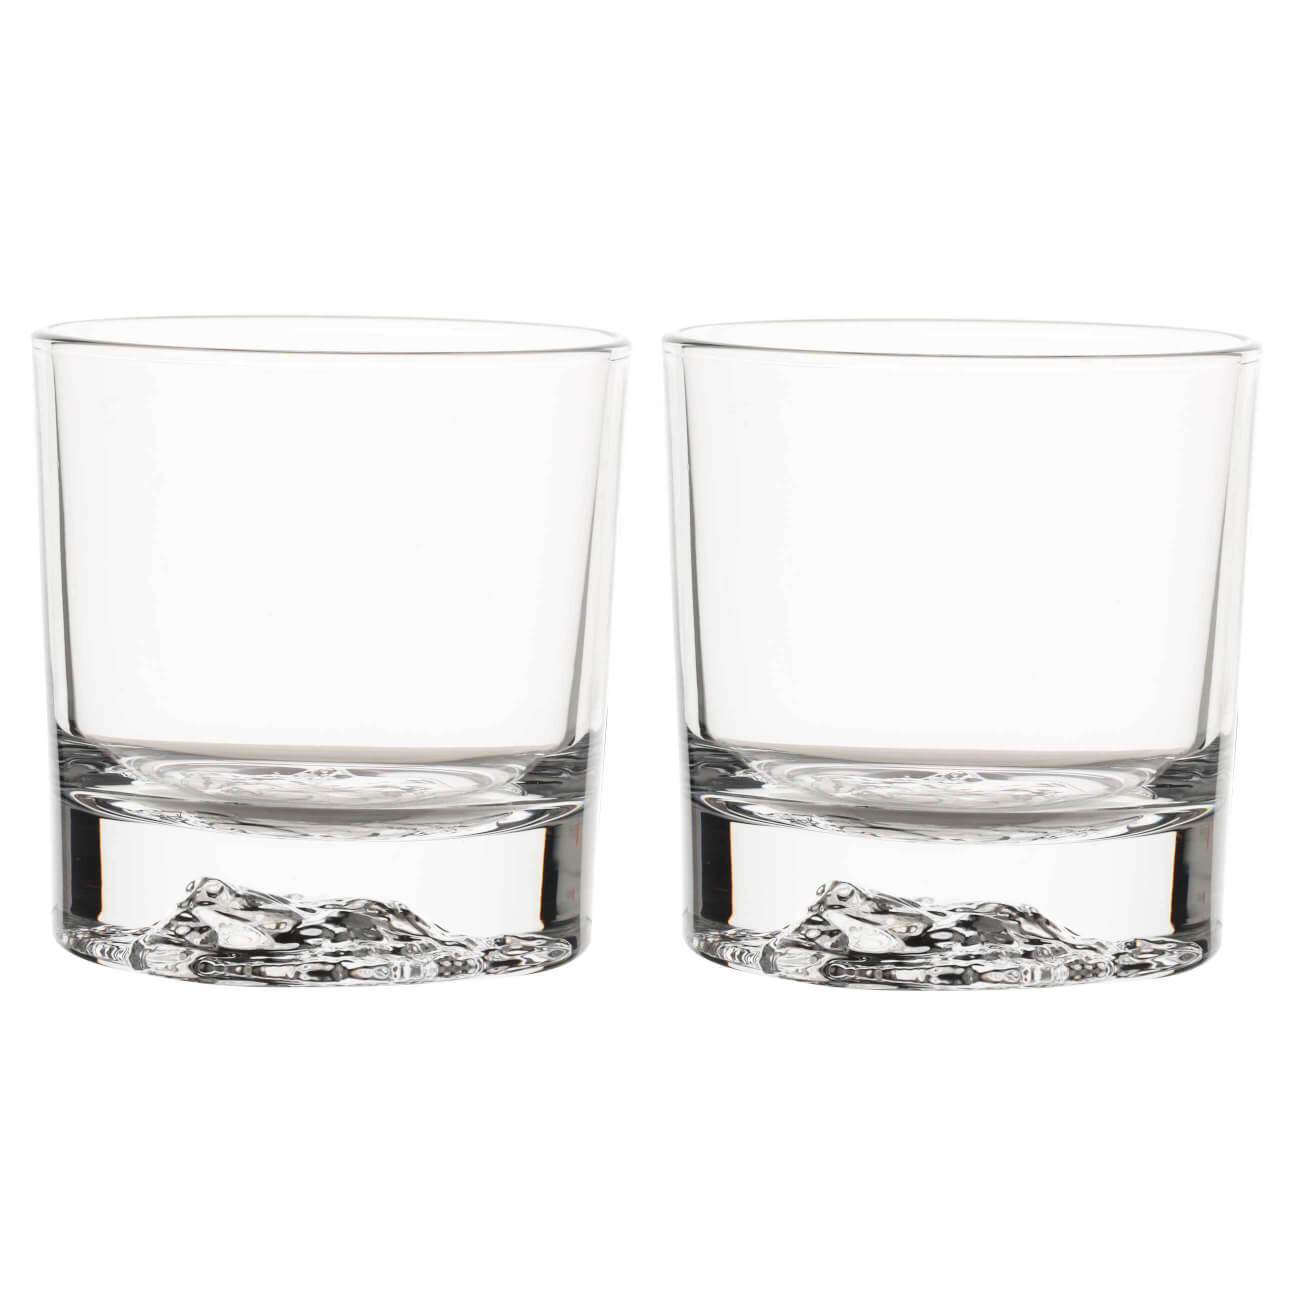 стакан для виски crystalex идеал набор 6 шт стекло 00895 Стакан для виски, 300 мл, 2 шт, стекло, Волк, Elements